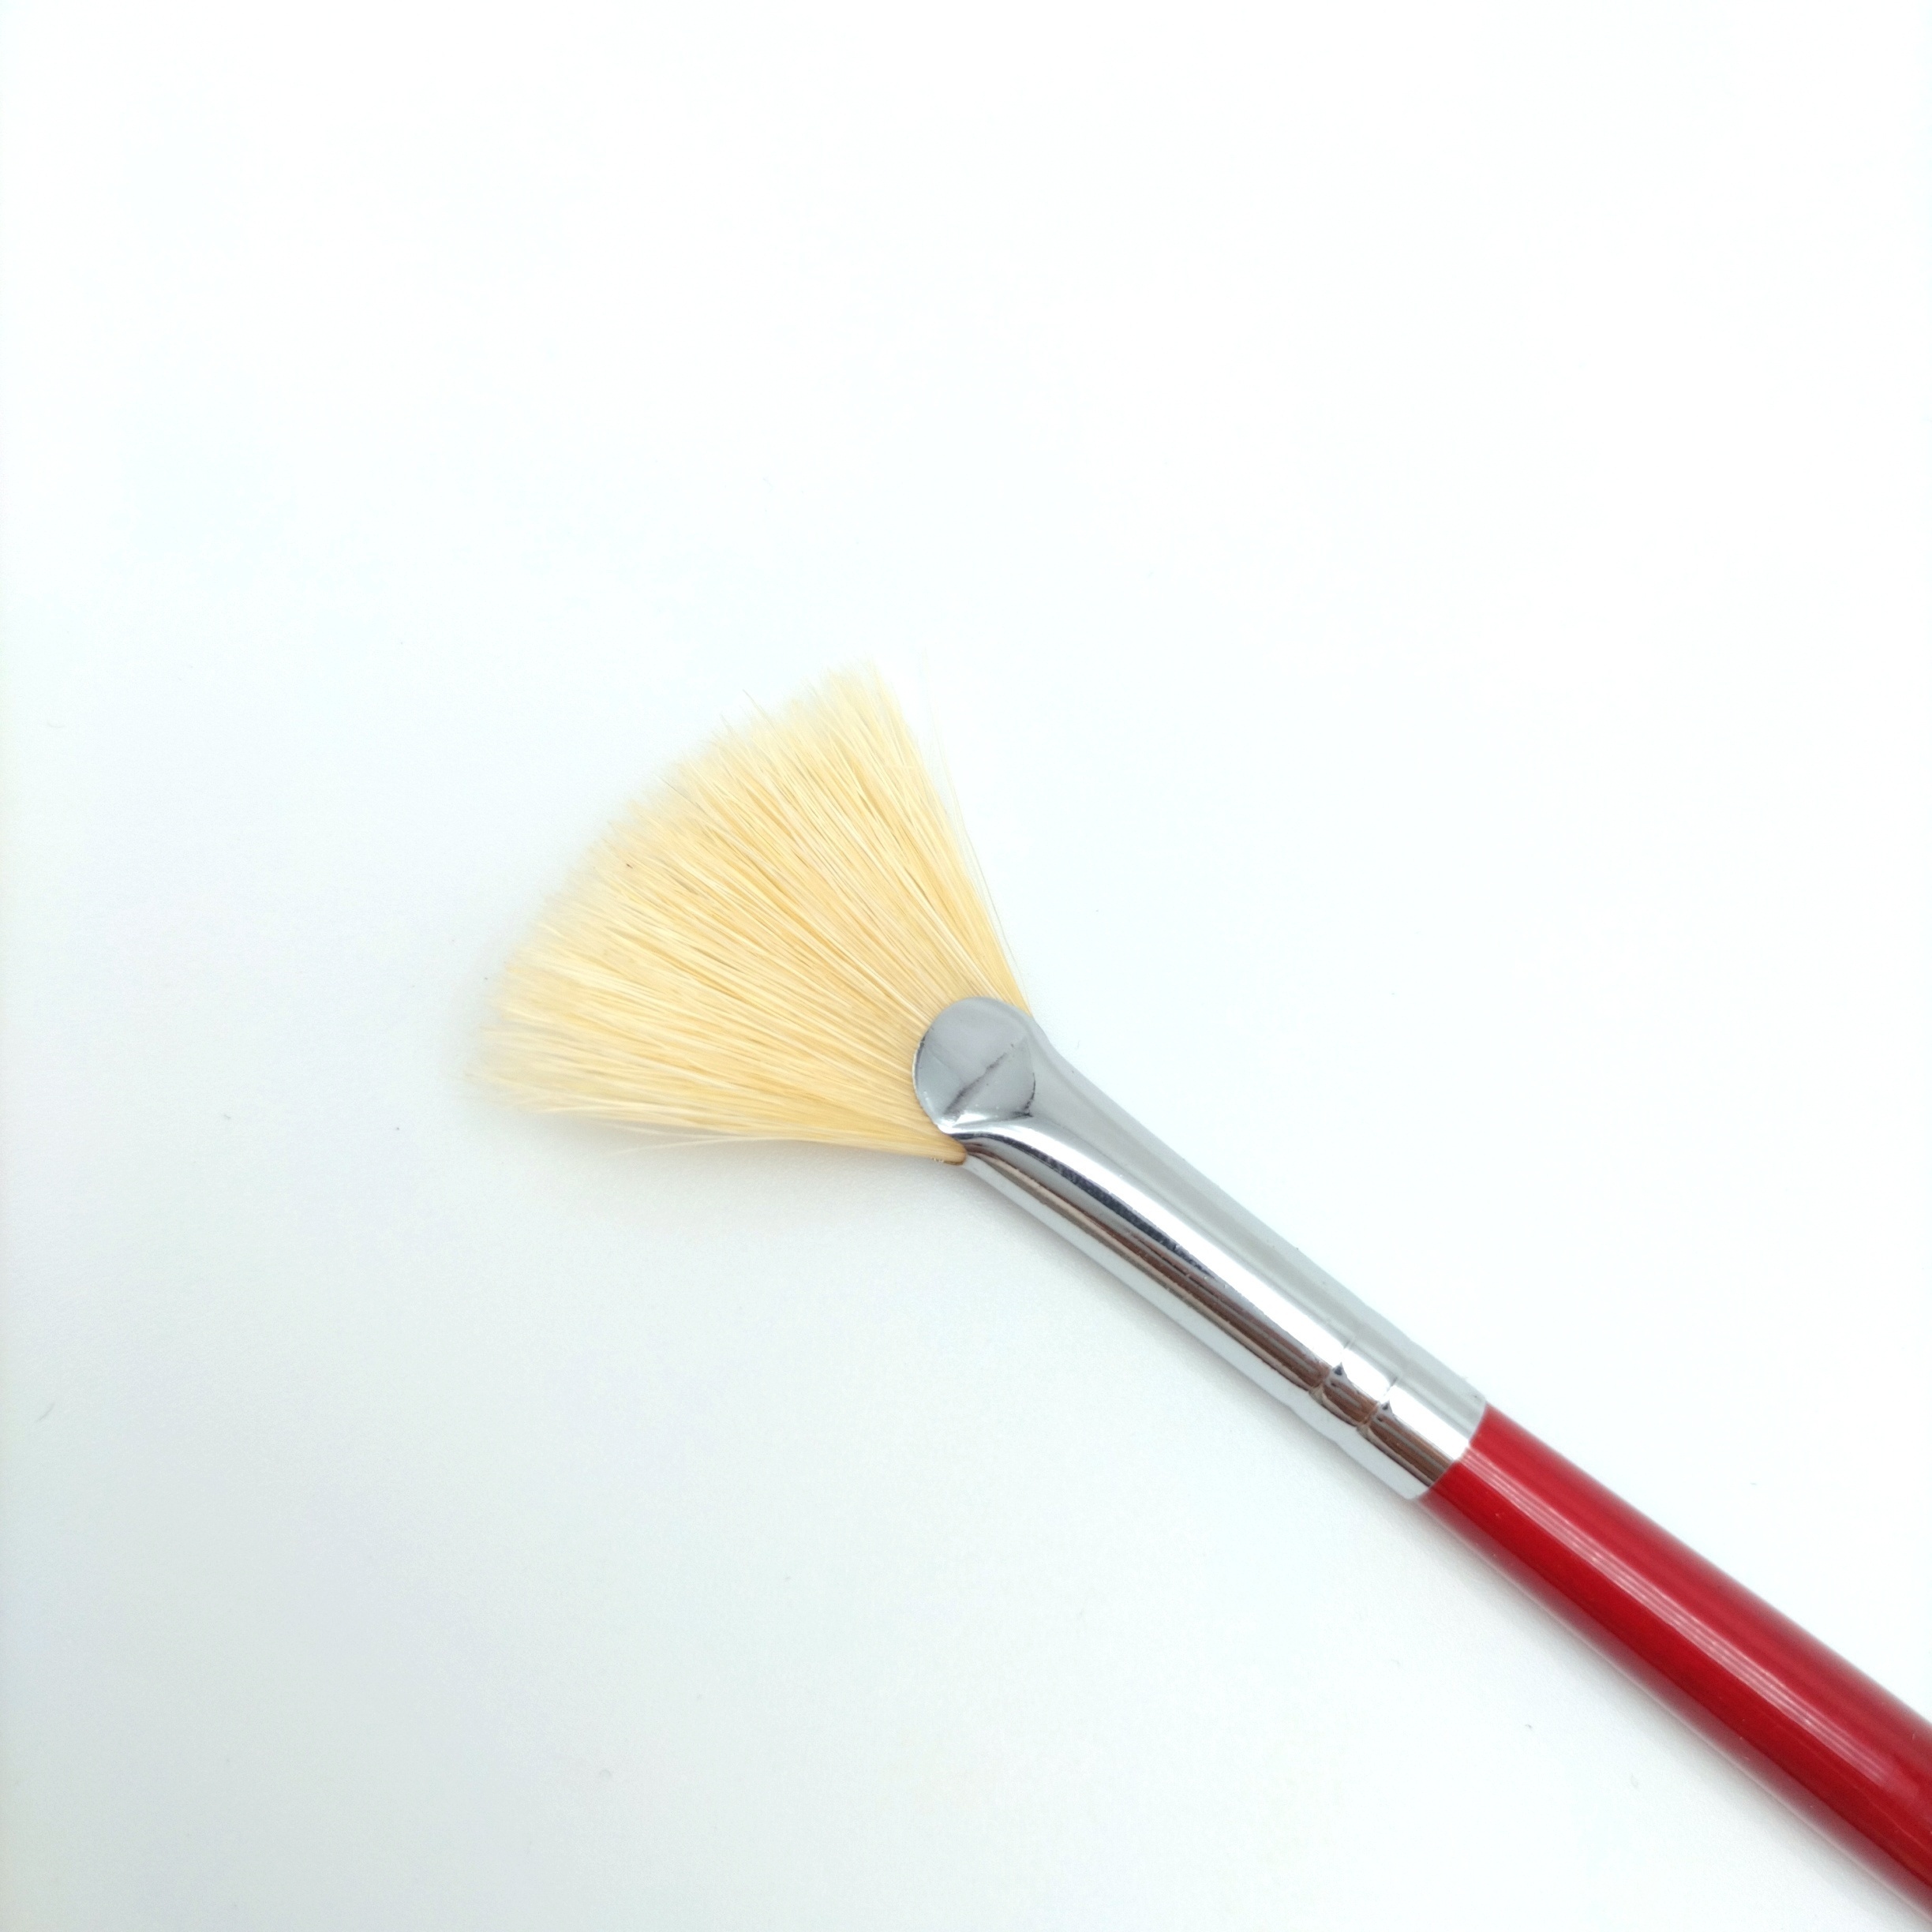 Bristles Fan Brush Painting Oil Paintbrush Gouache Acrylic - Temu